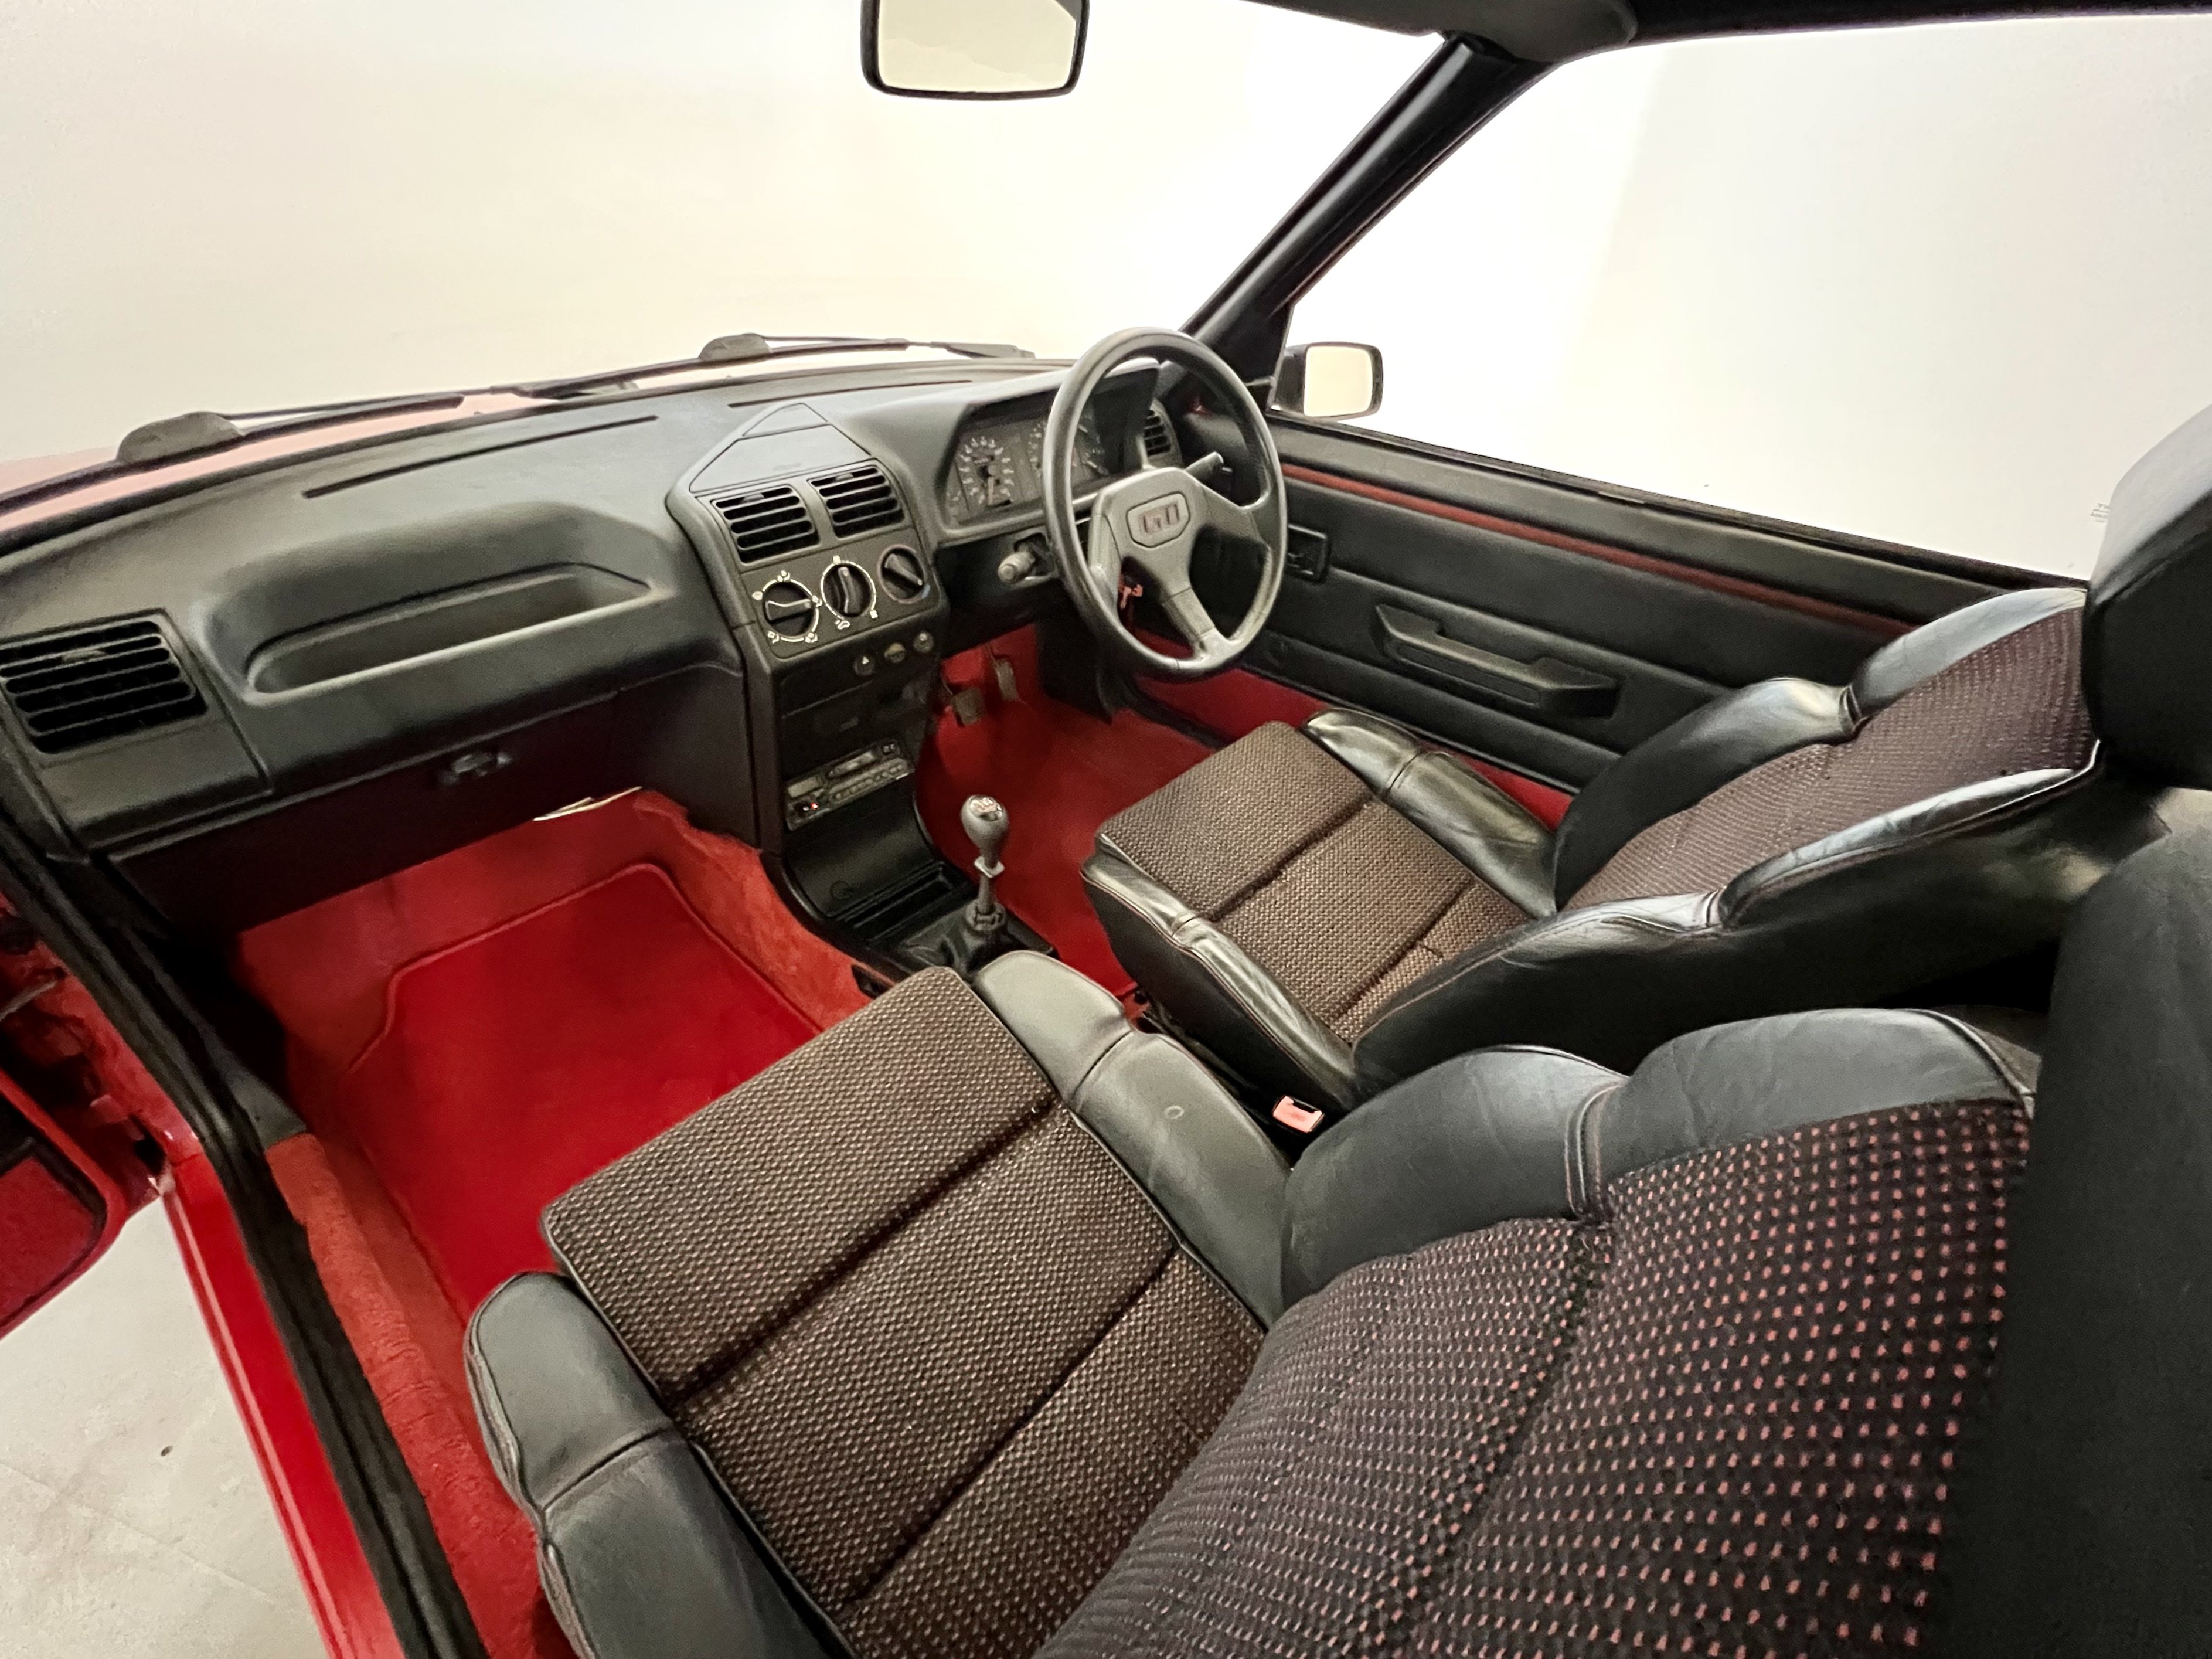 Peugeot 205 GTI 1.9 - Image 23 of 30